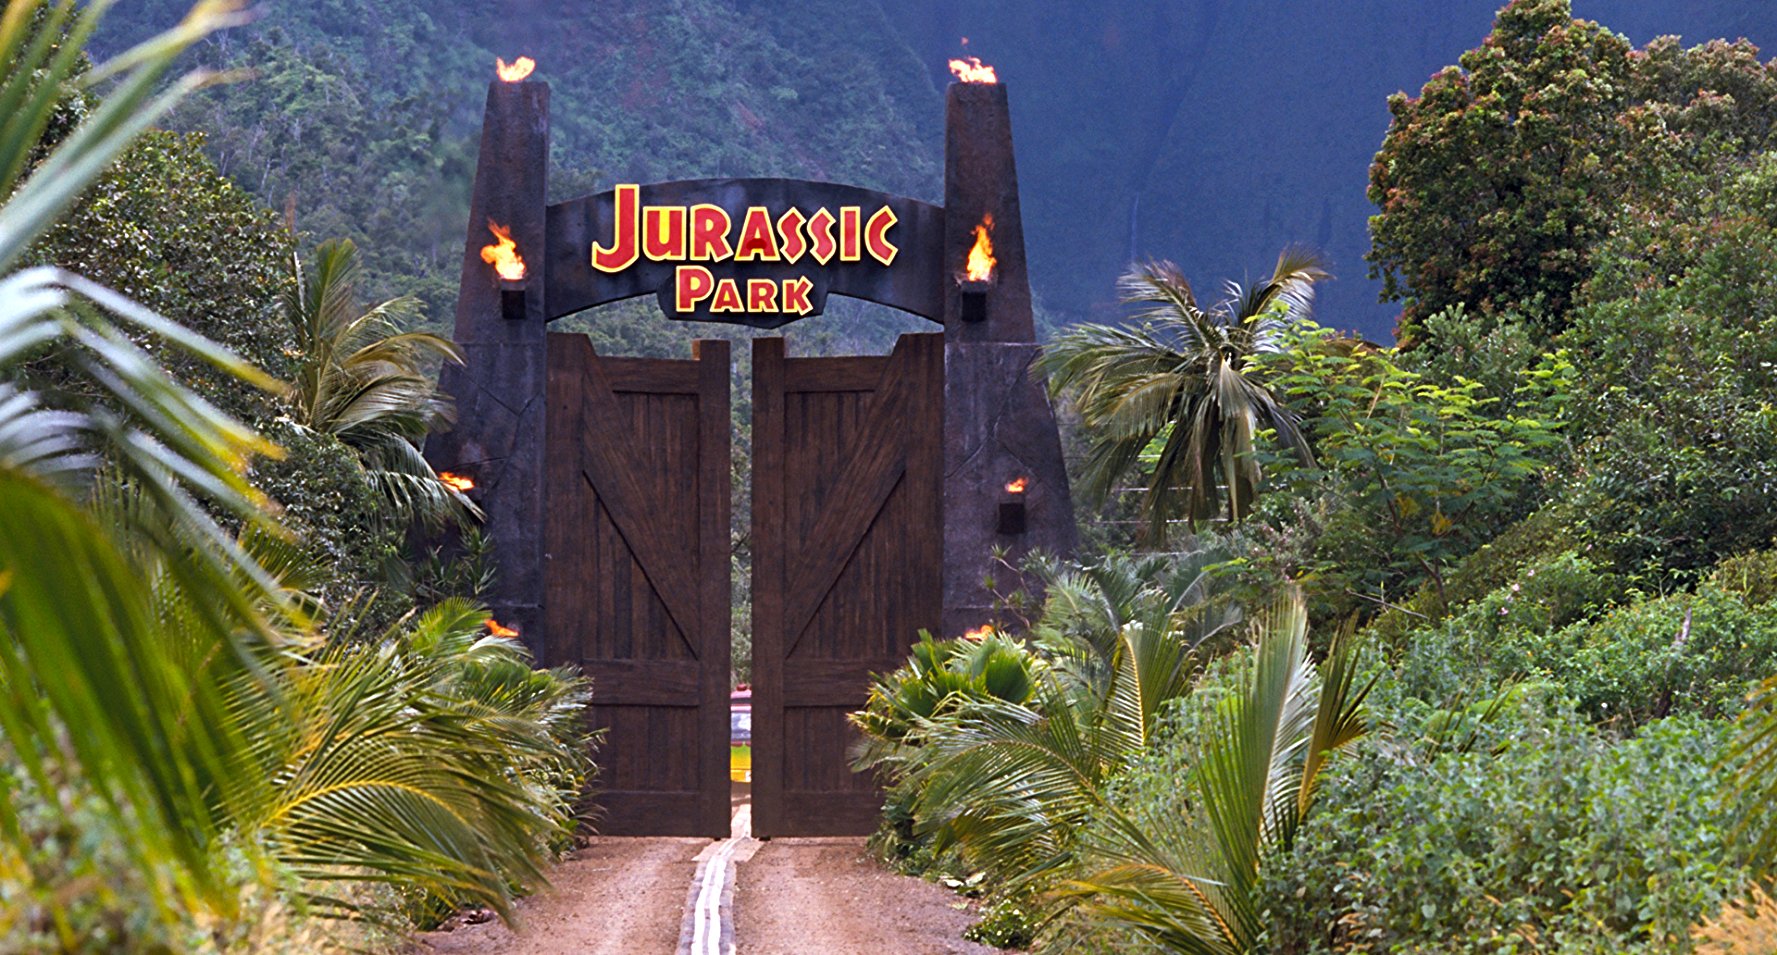 jurassic park gate - Jurassic Park